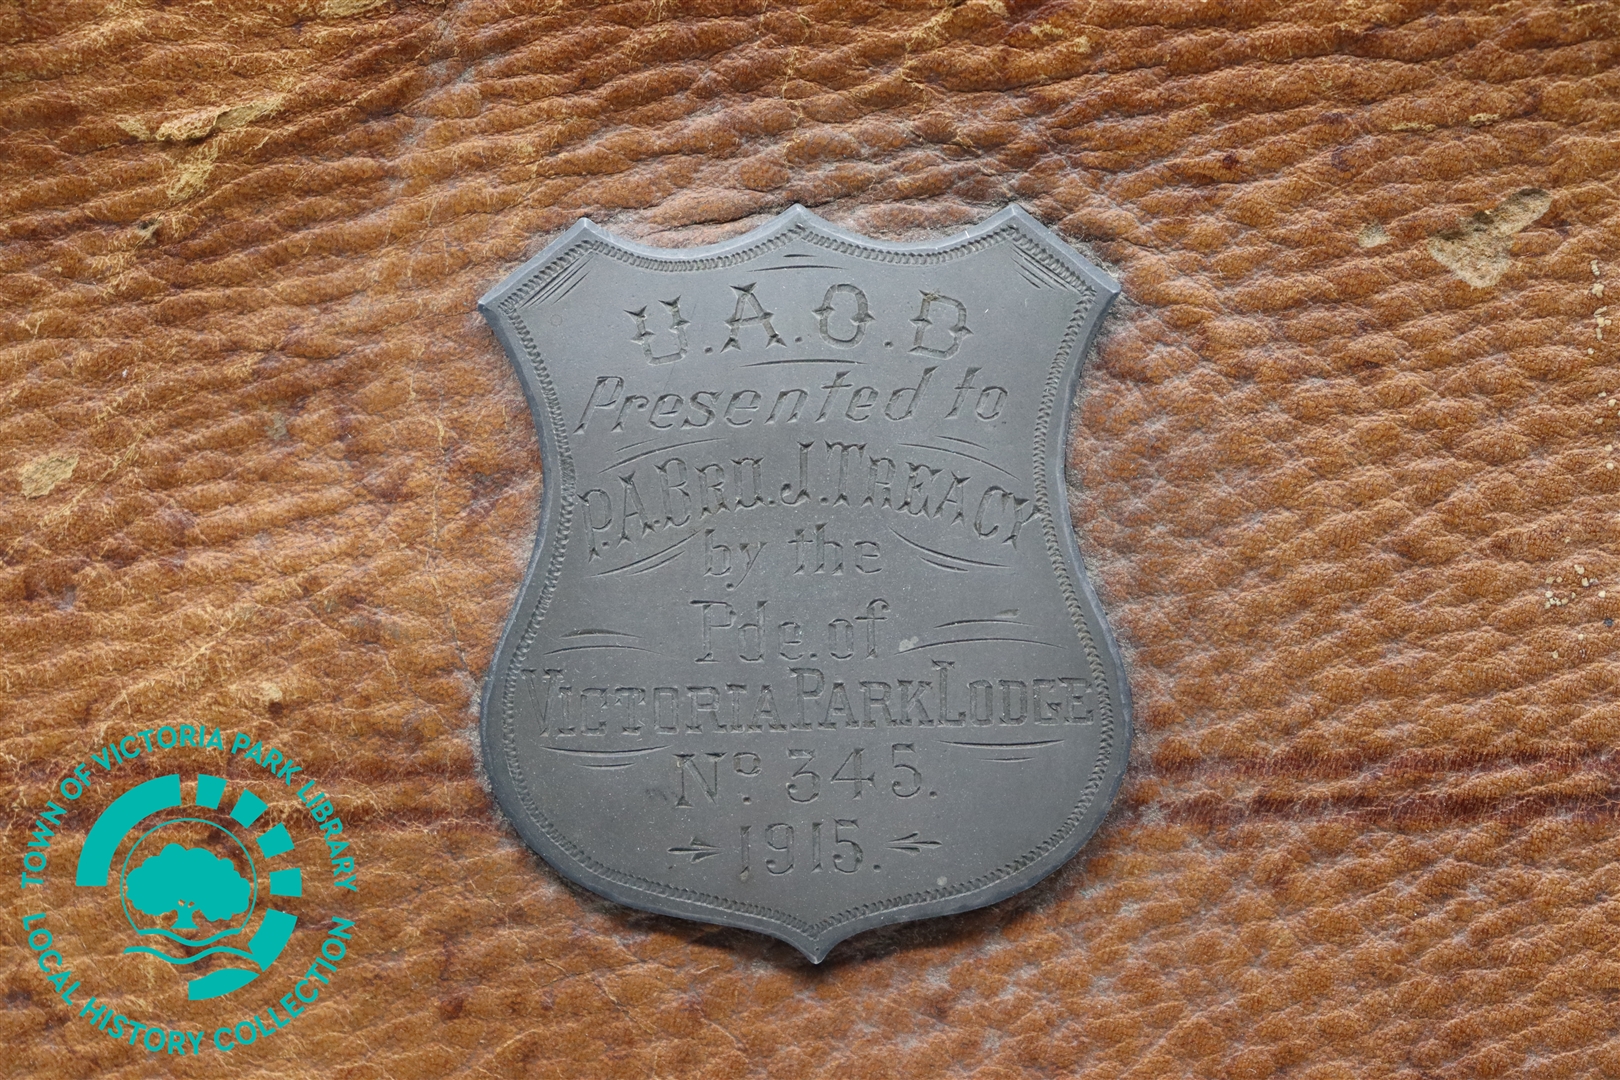 Close-up of engraved dedication on Mr J. Treacy's leather satchel Image